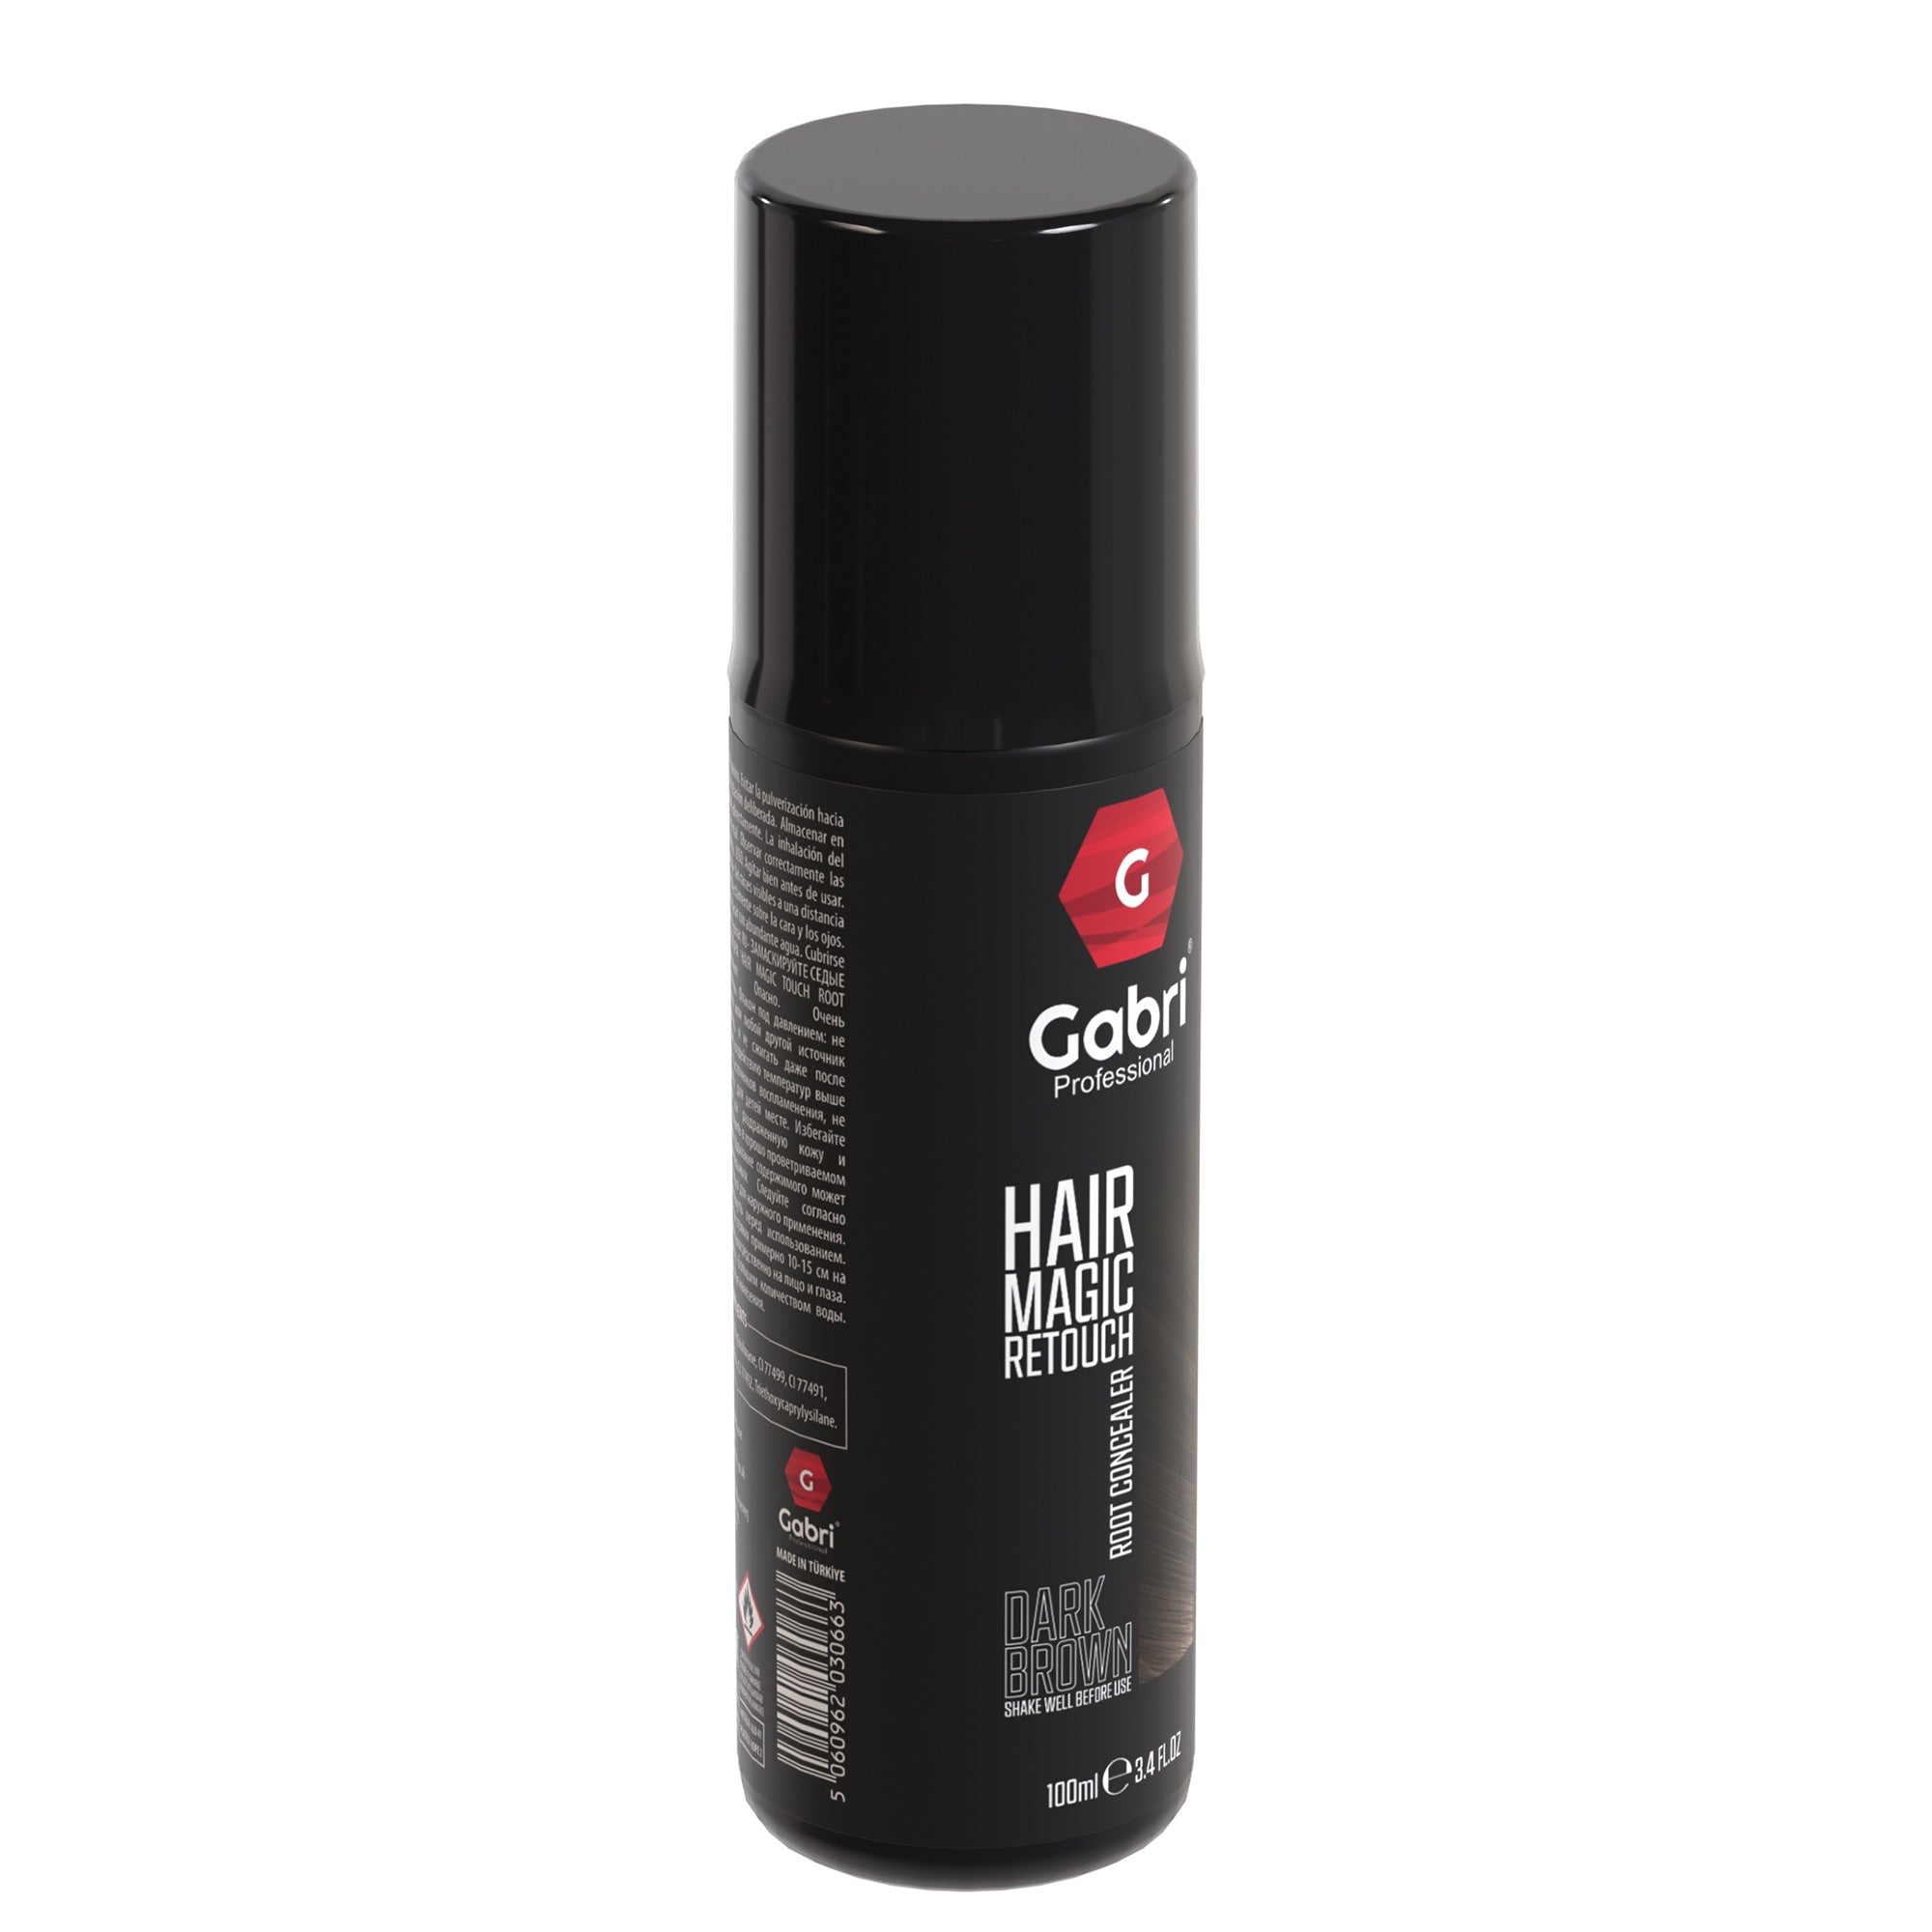 Gabri Professional - Magic Retouch  Hair Spray Root Concealer Dark Brown 100ml